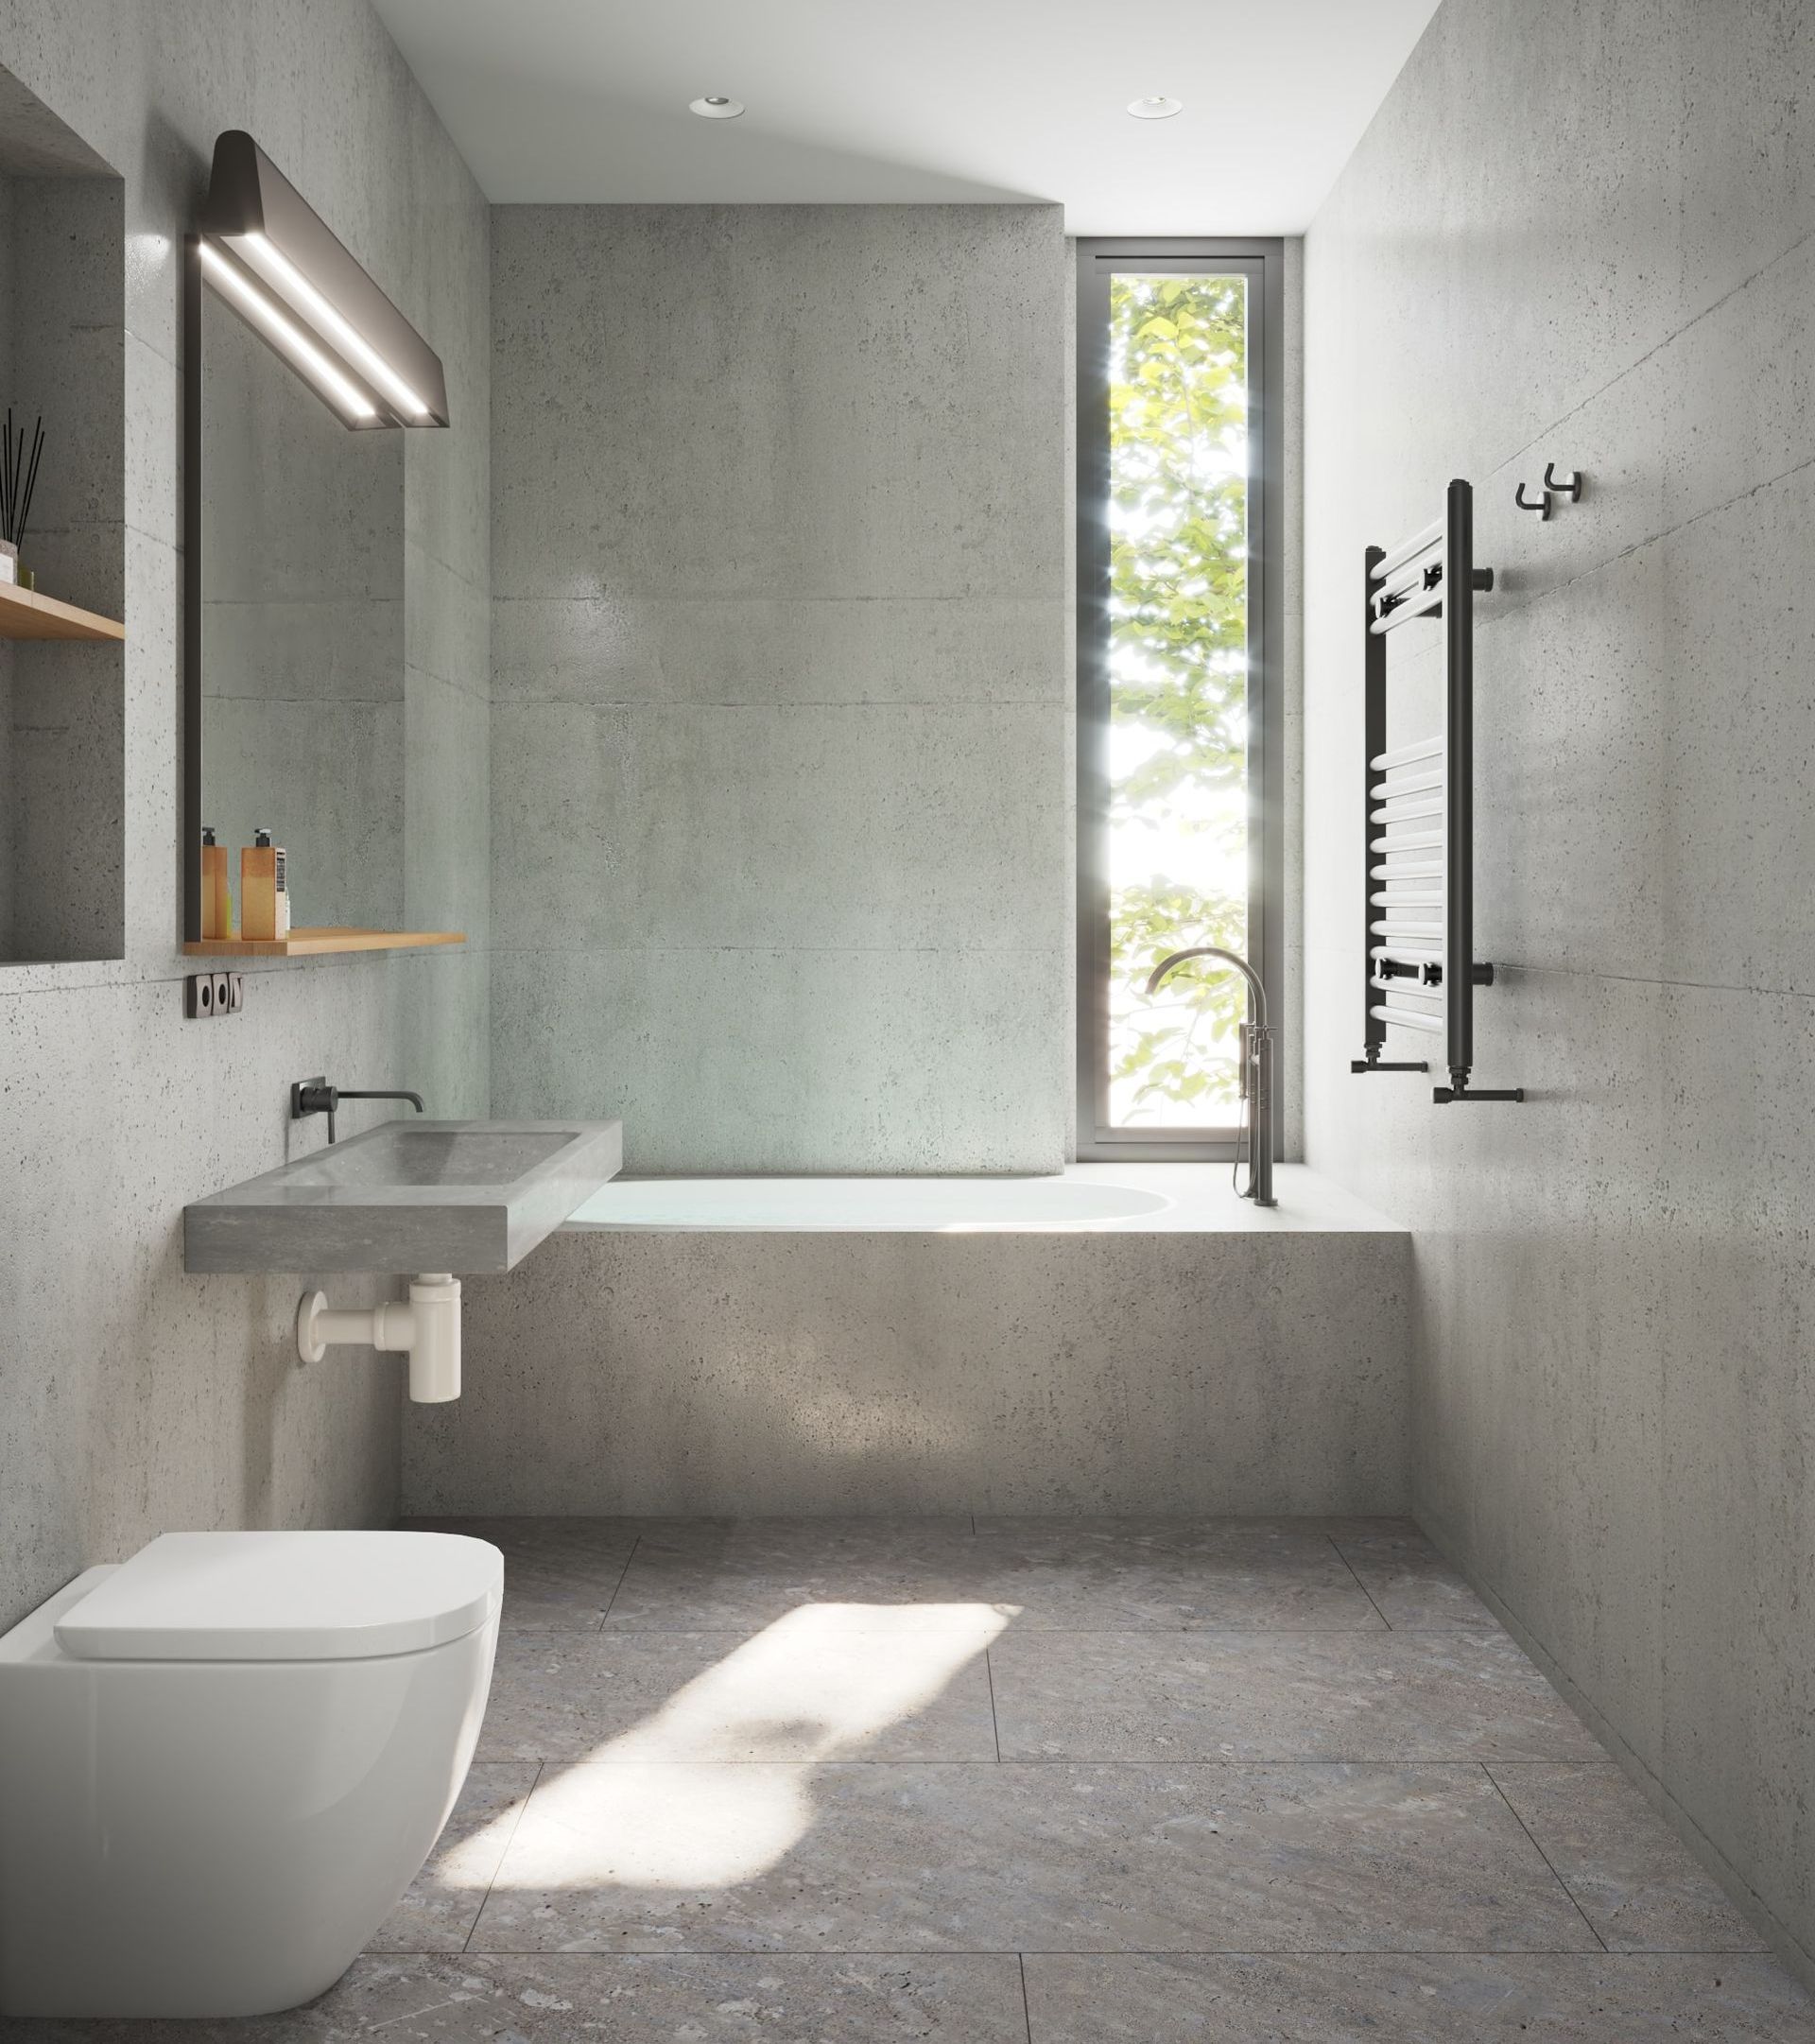 Modern concrete bathroom with sleek design and minimalist fixtures.